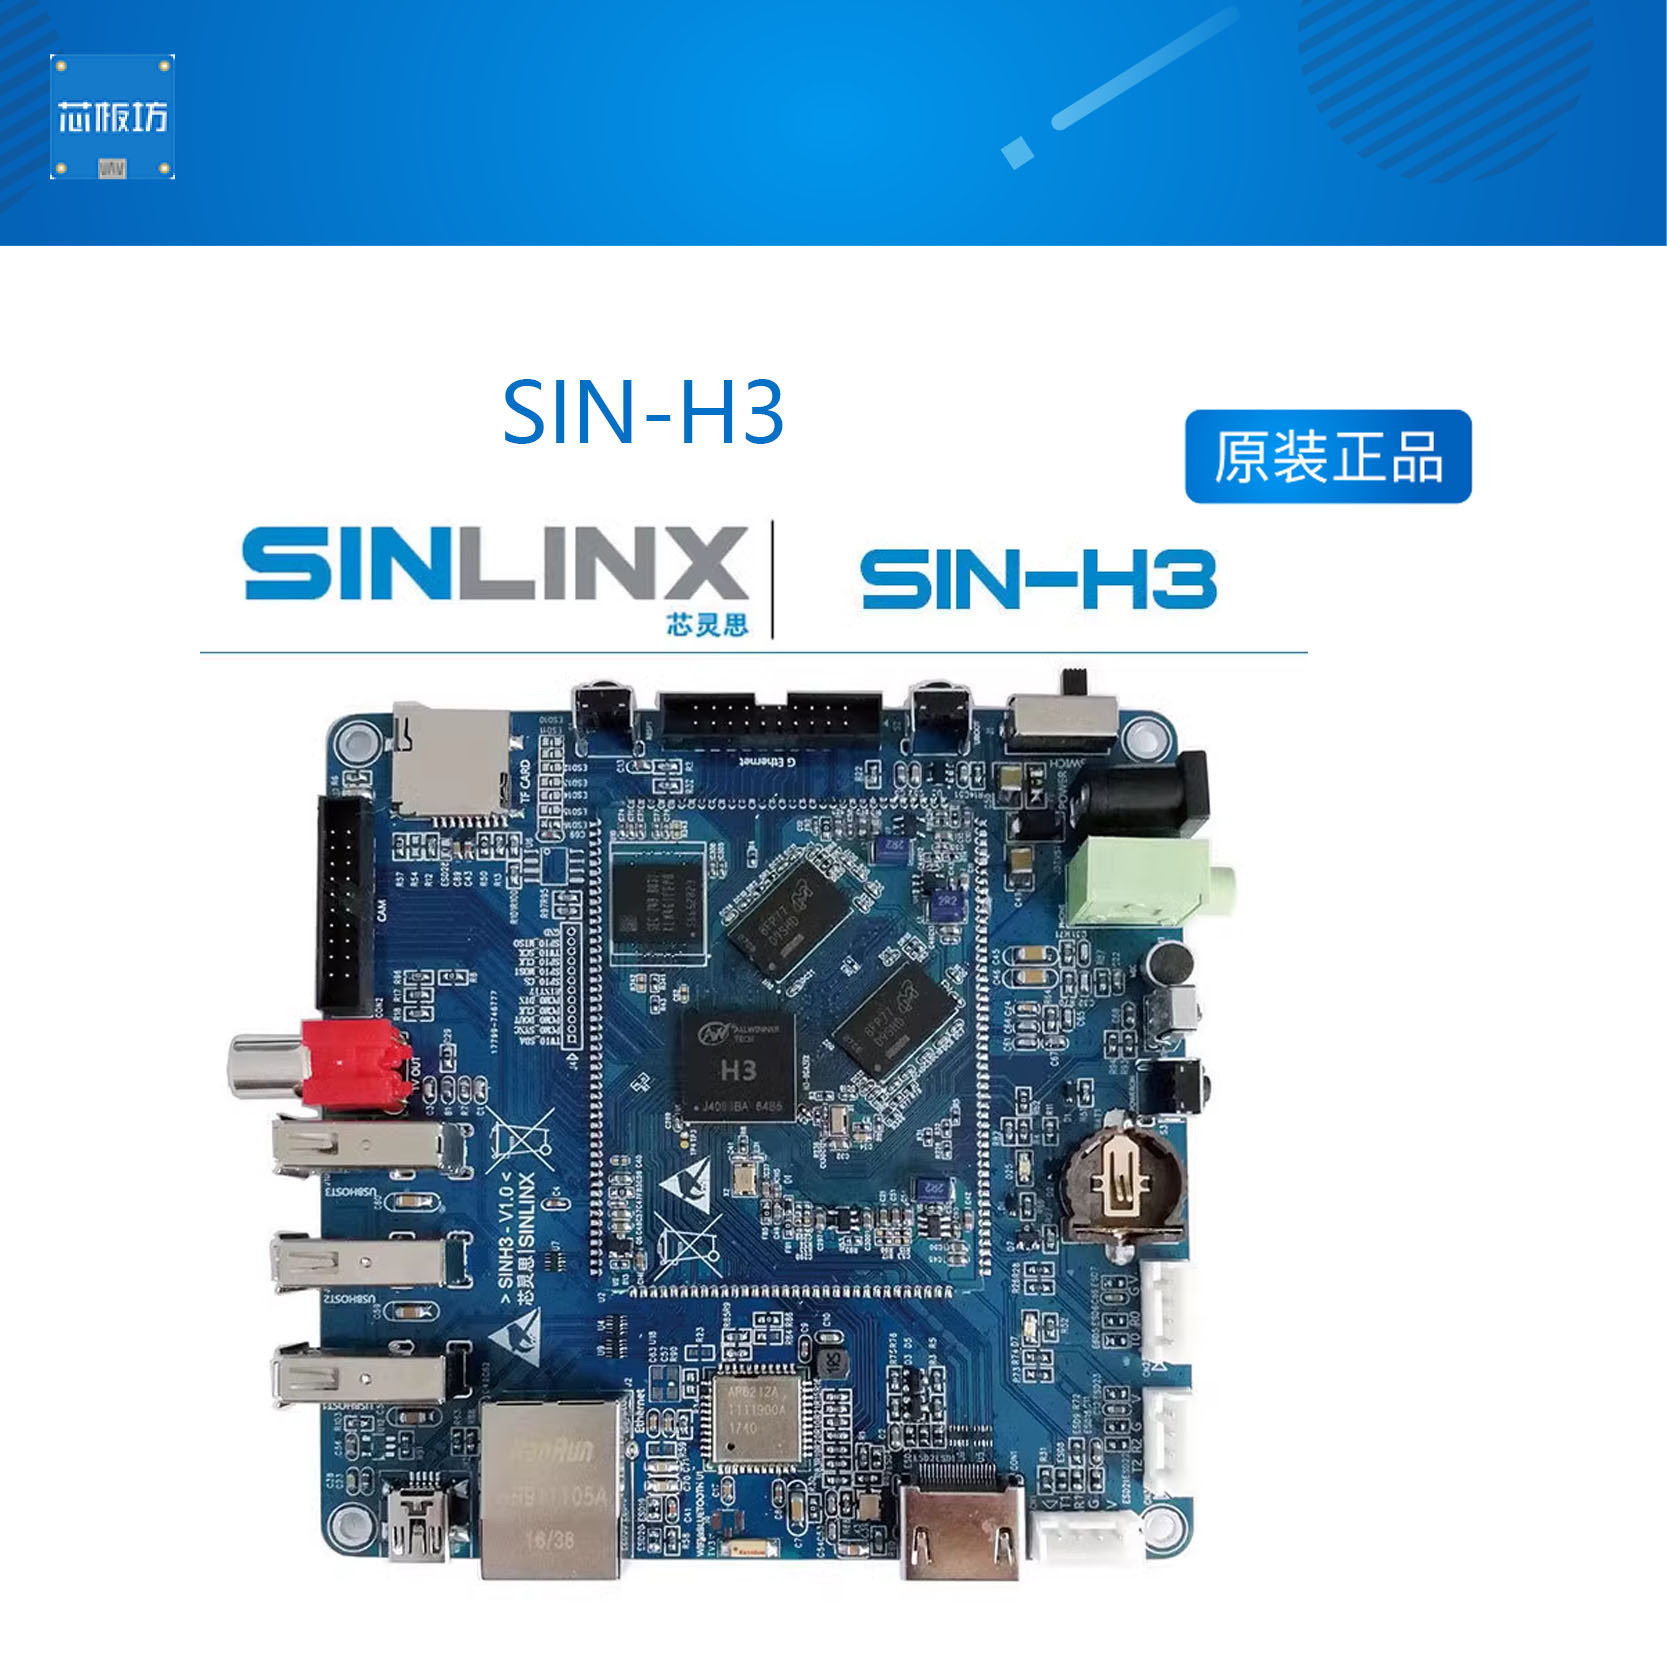 SINLINX 全志 SIN-H3 四核 android debian 开发板 芯板坊人气